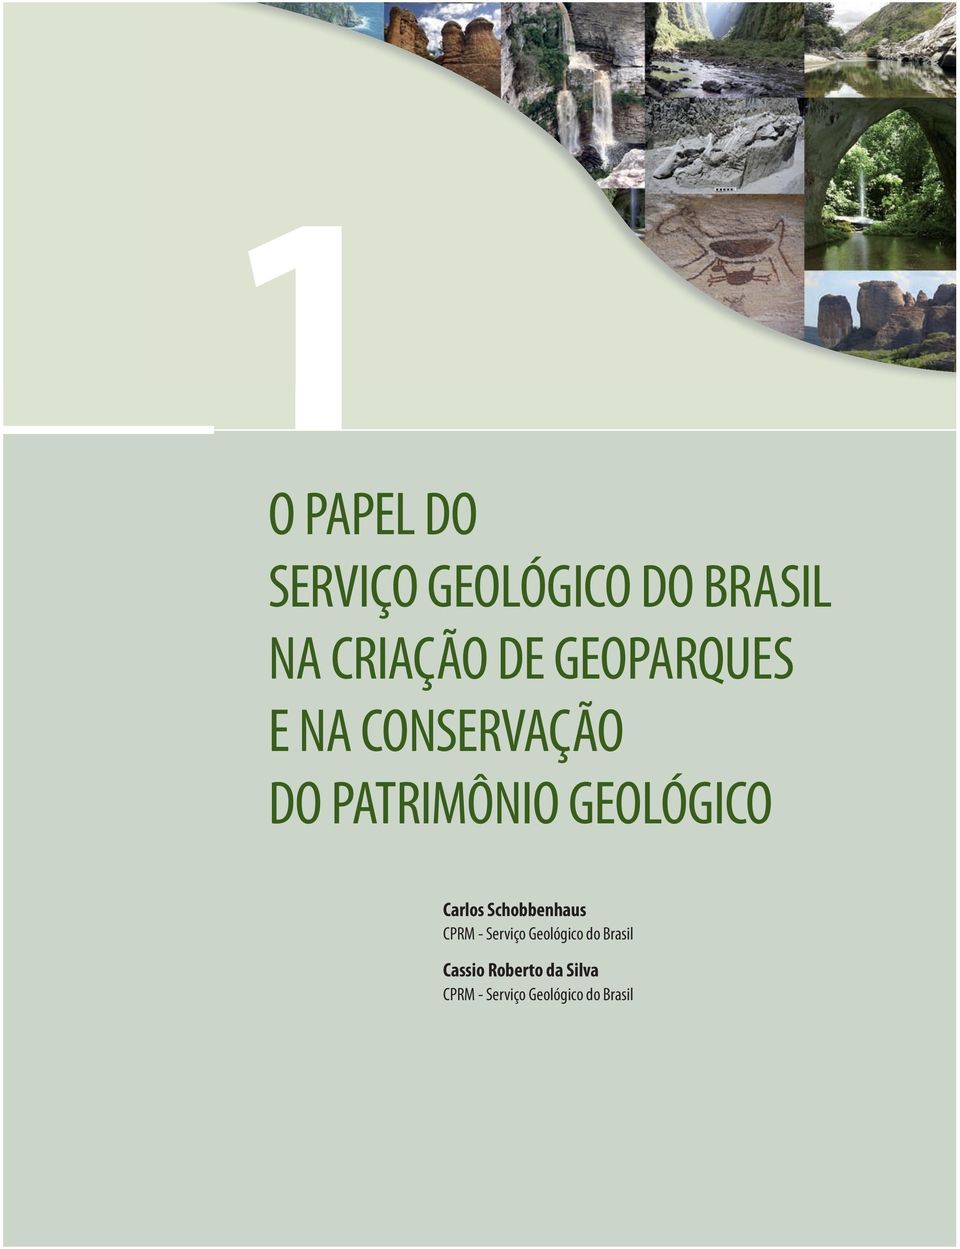 Carlos Schobbenhaus cprm - Serviço Geológico do Brasil